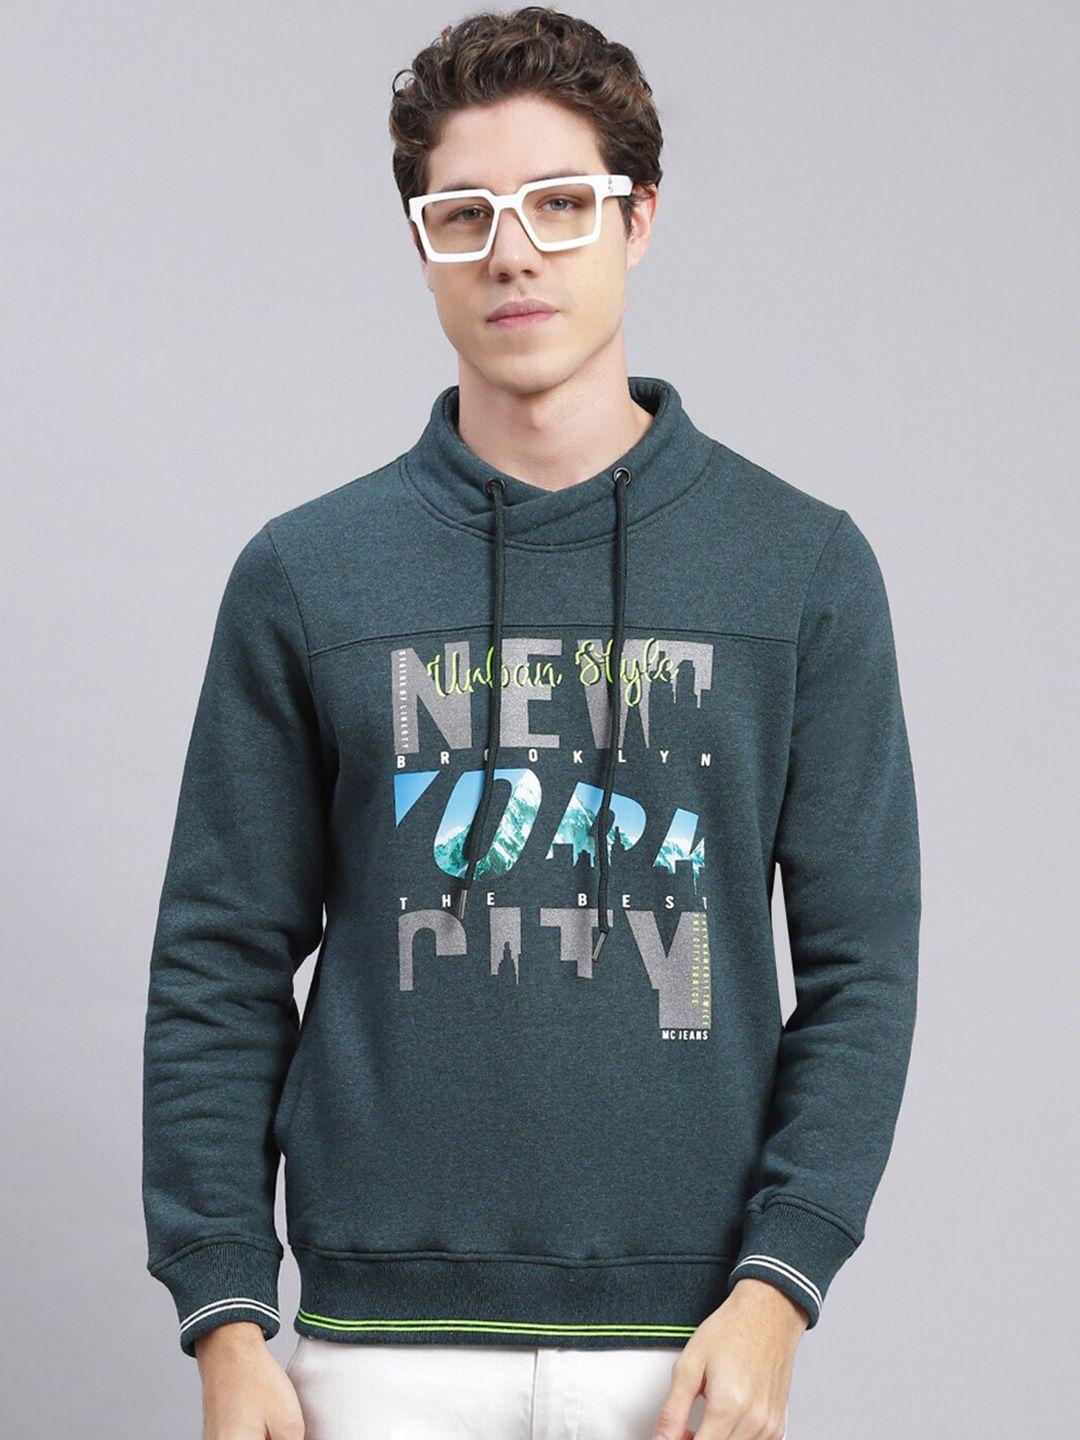 monte carlo typography printed high neck pullover sweatshirt